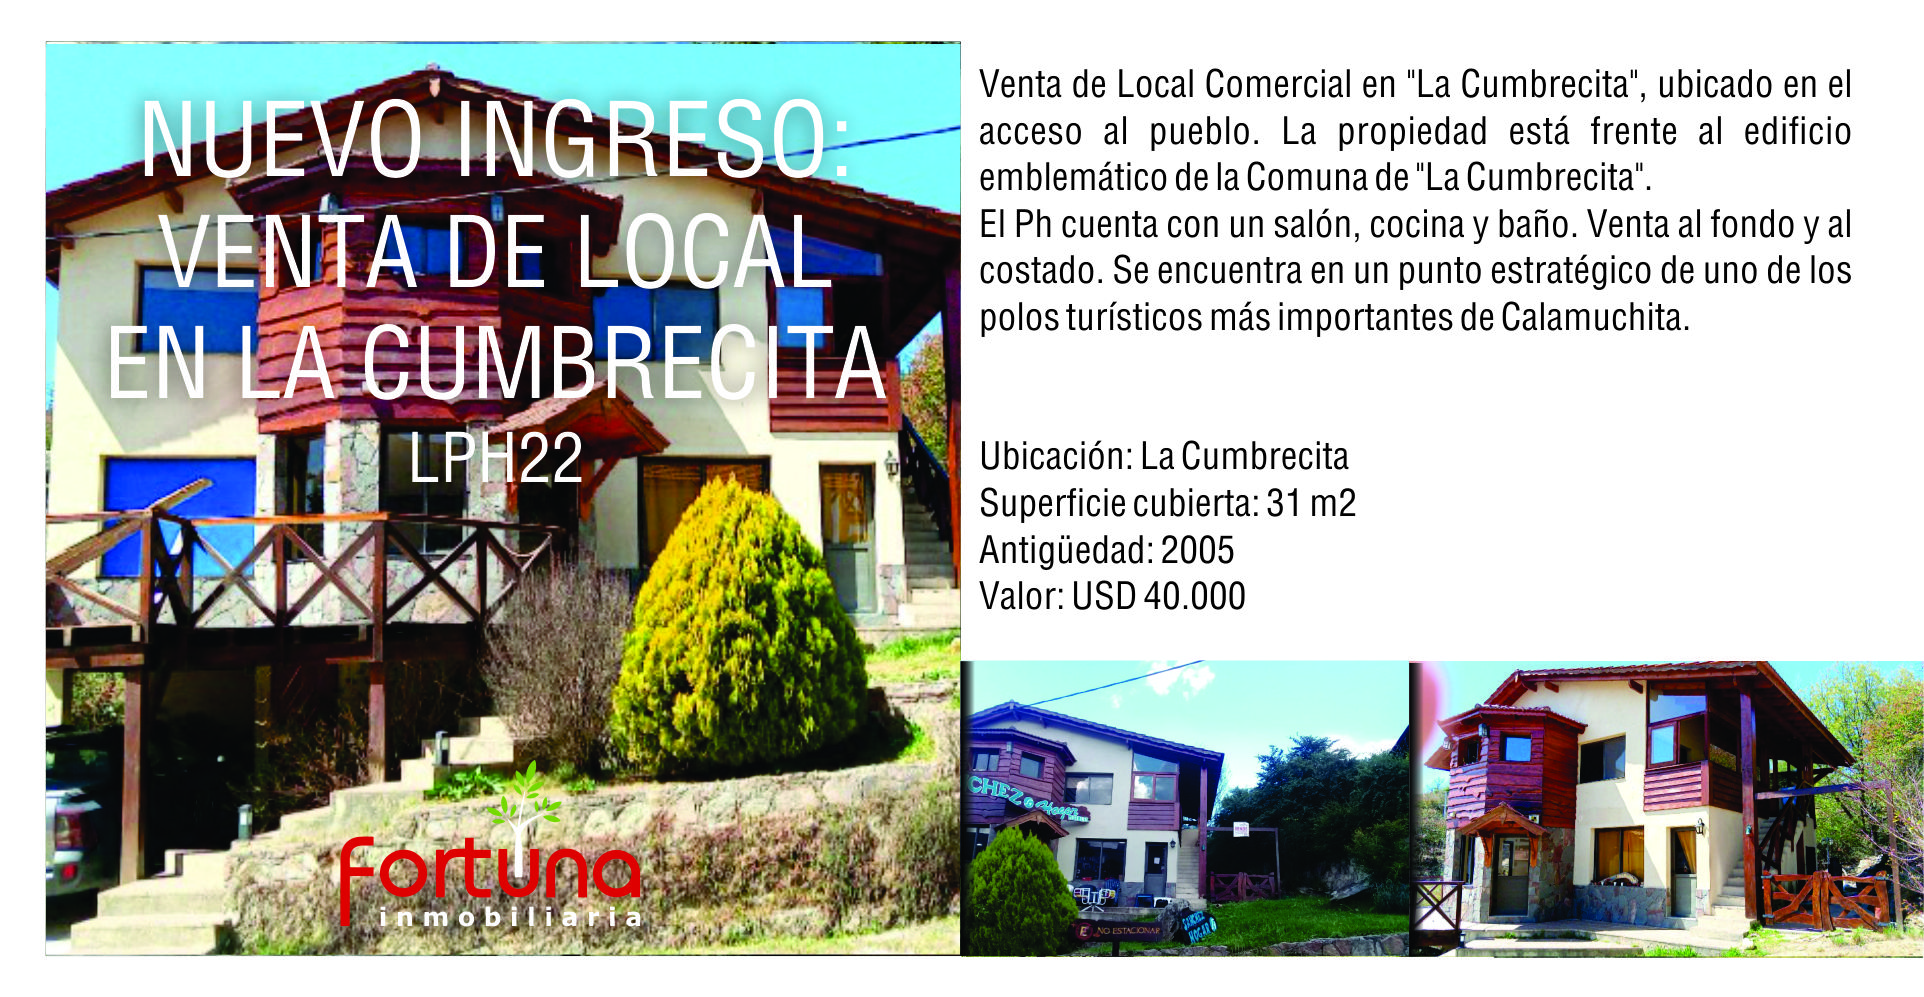 LPH22-VentaDeLocal-LaCumbrecita-LocalComercial-FortunaInmobiliaria-Inmobiliaria